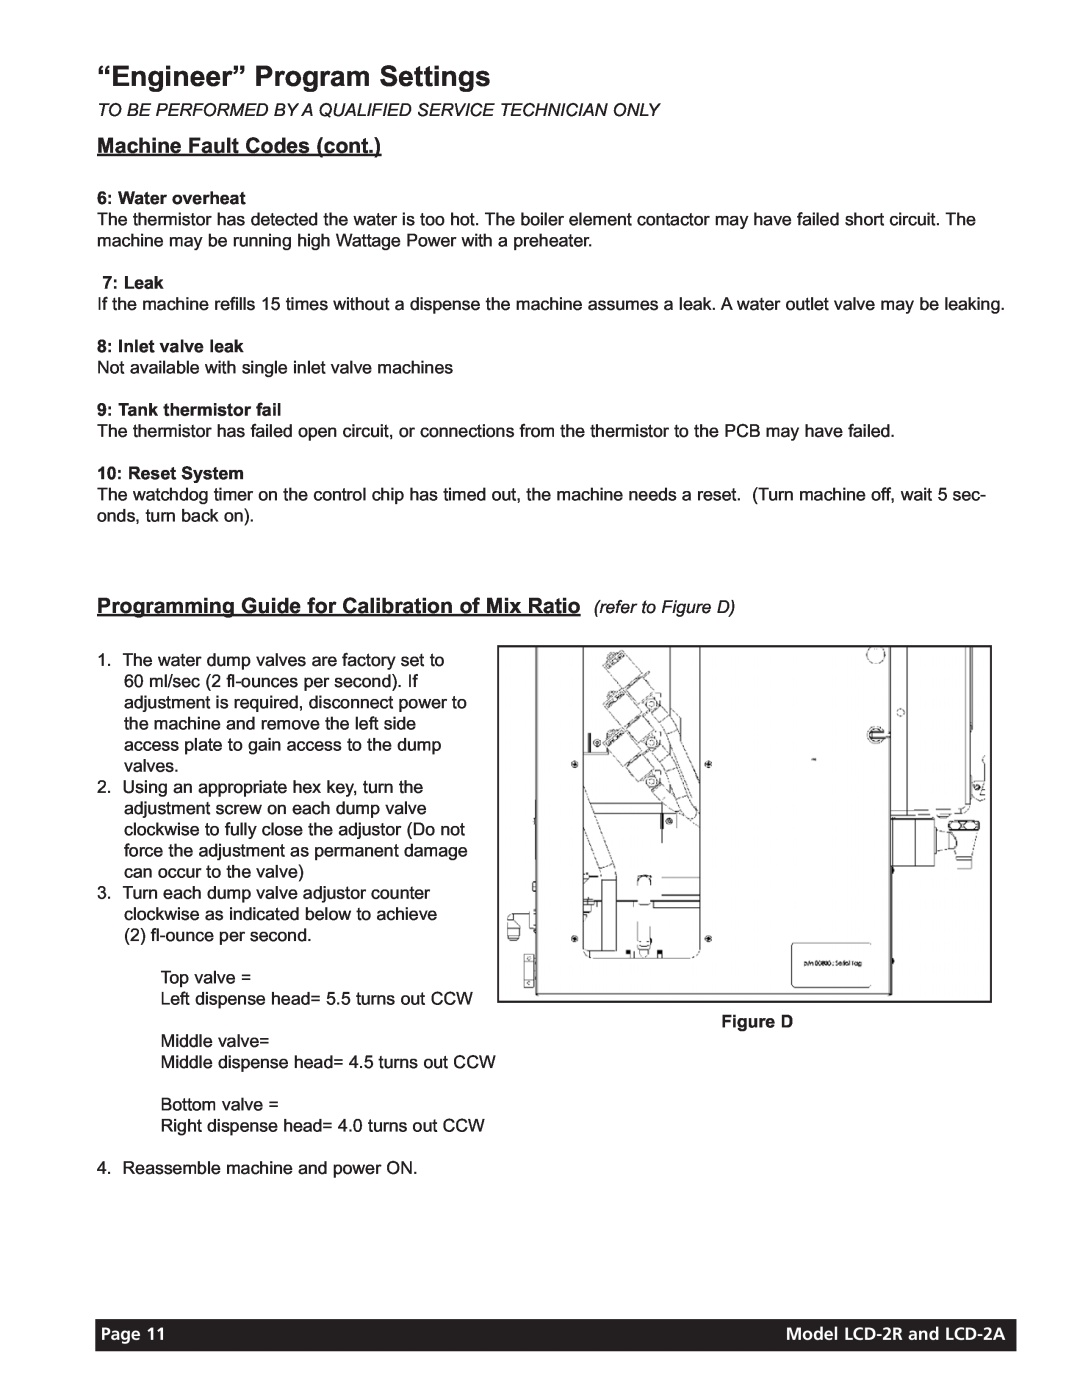 Grindmaster LCD-2R Machine Fault Codes cont, “Engineer” Program Settings, 6: Water overheat, 7: Leak, 8: Inlet valve leak 